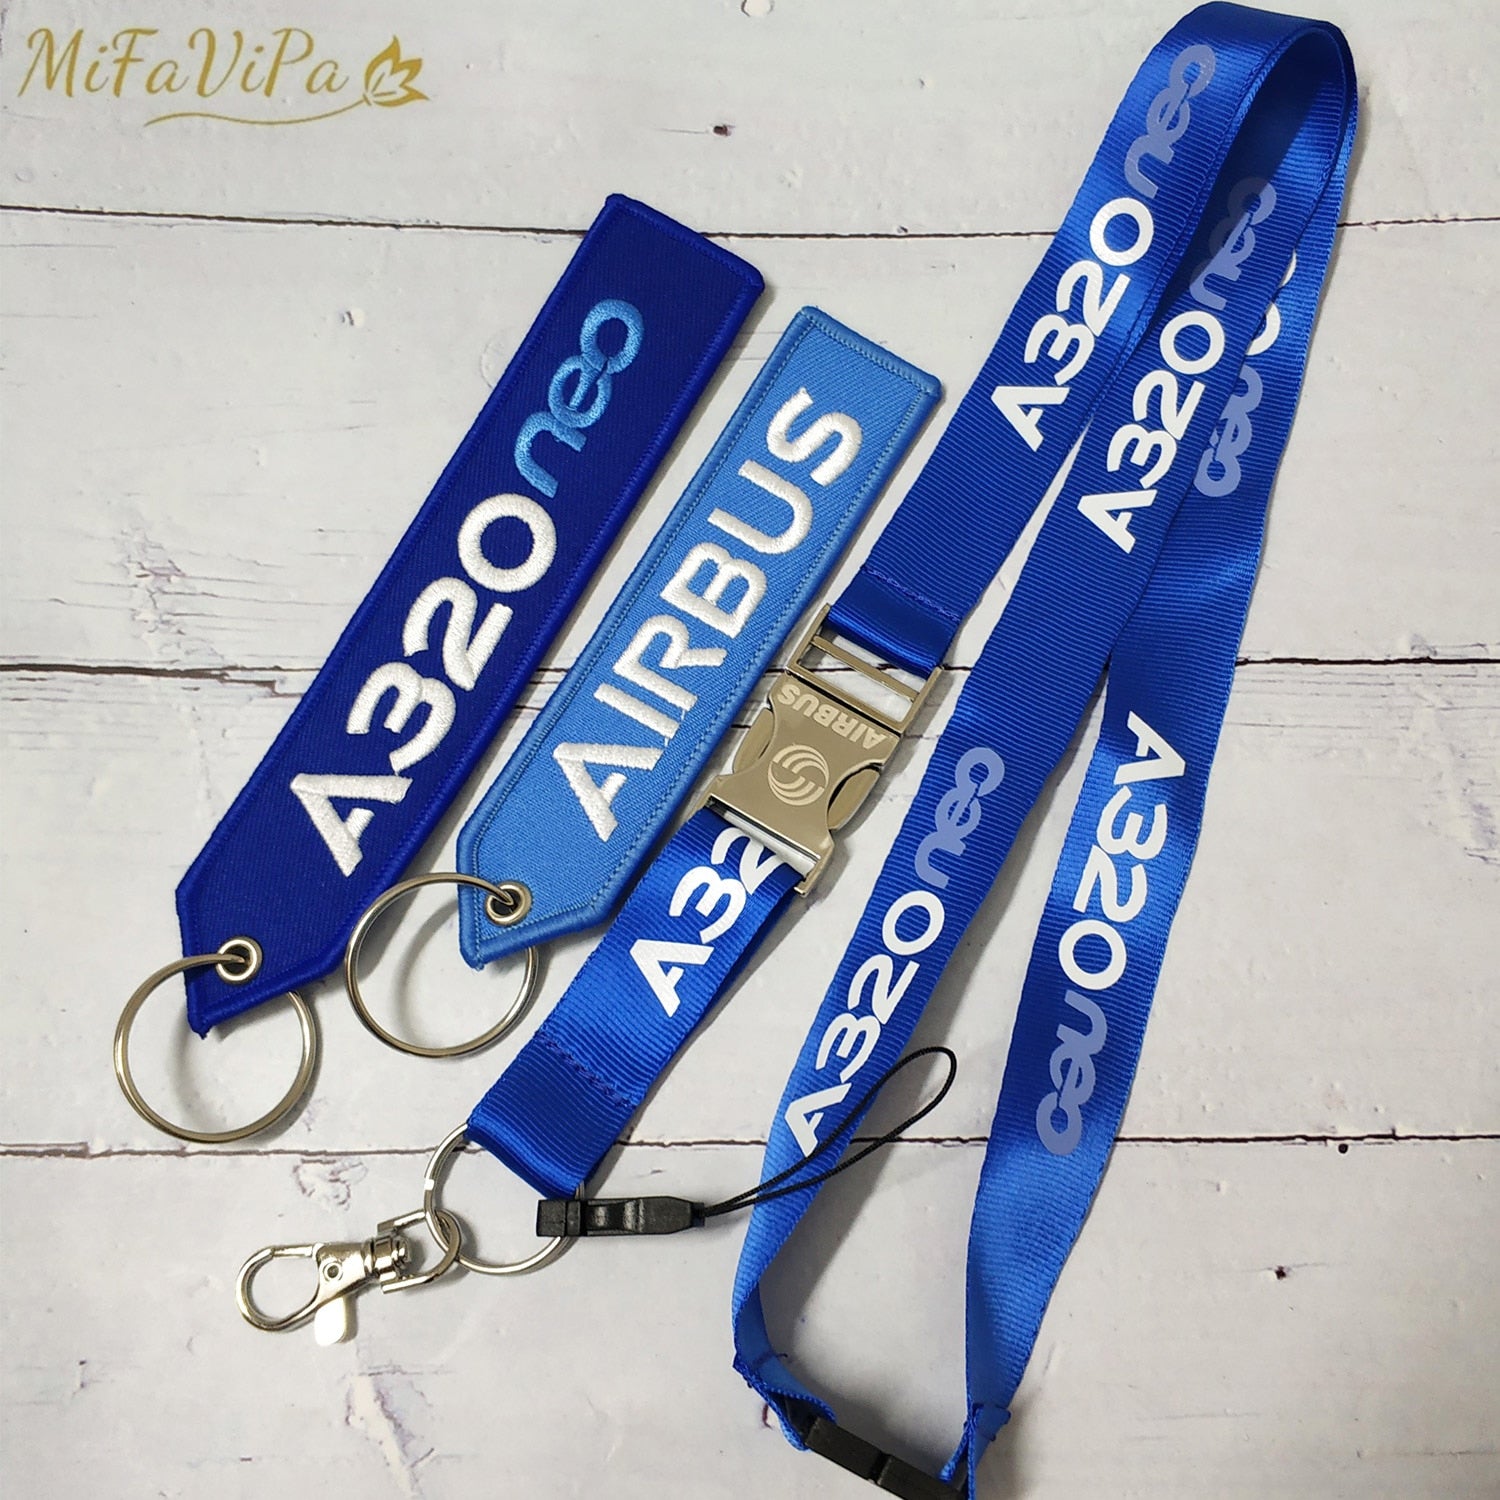 MiFaViPa 3 PCS Blue A320 Neo Lanyards Keychain Fashion Trinket Flight Crew Aviation Aircraft Gift Key Chain AIRBUS Sleutelhanger